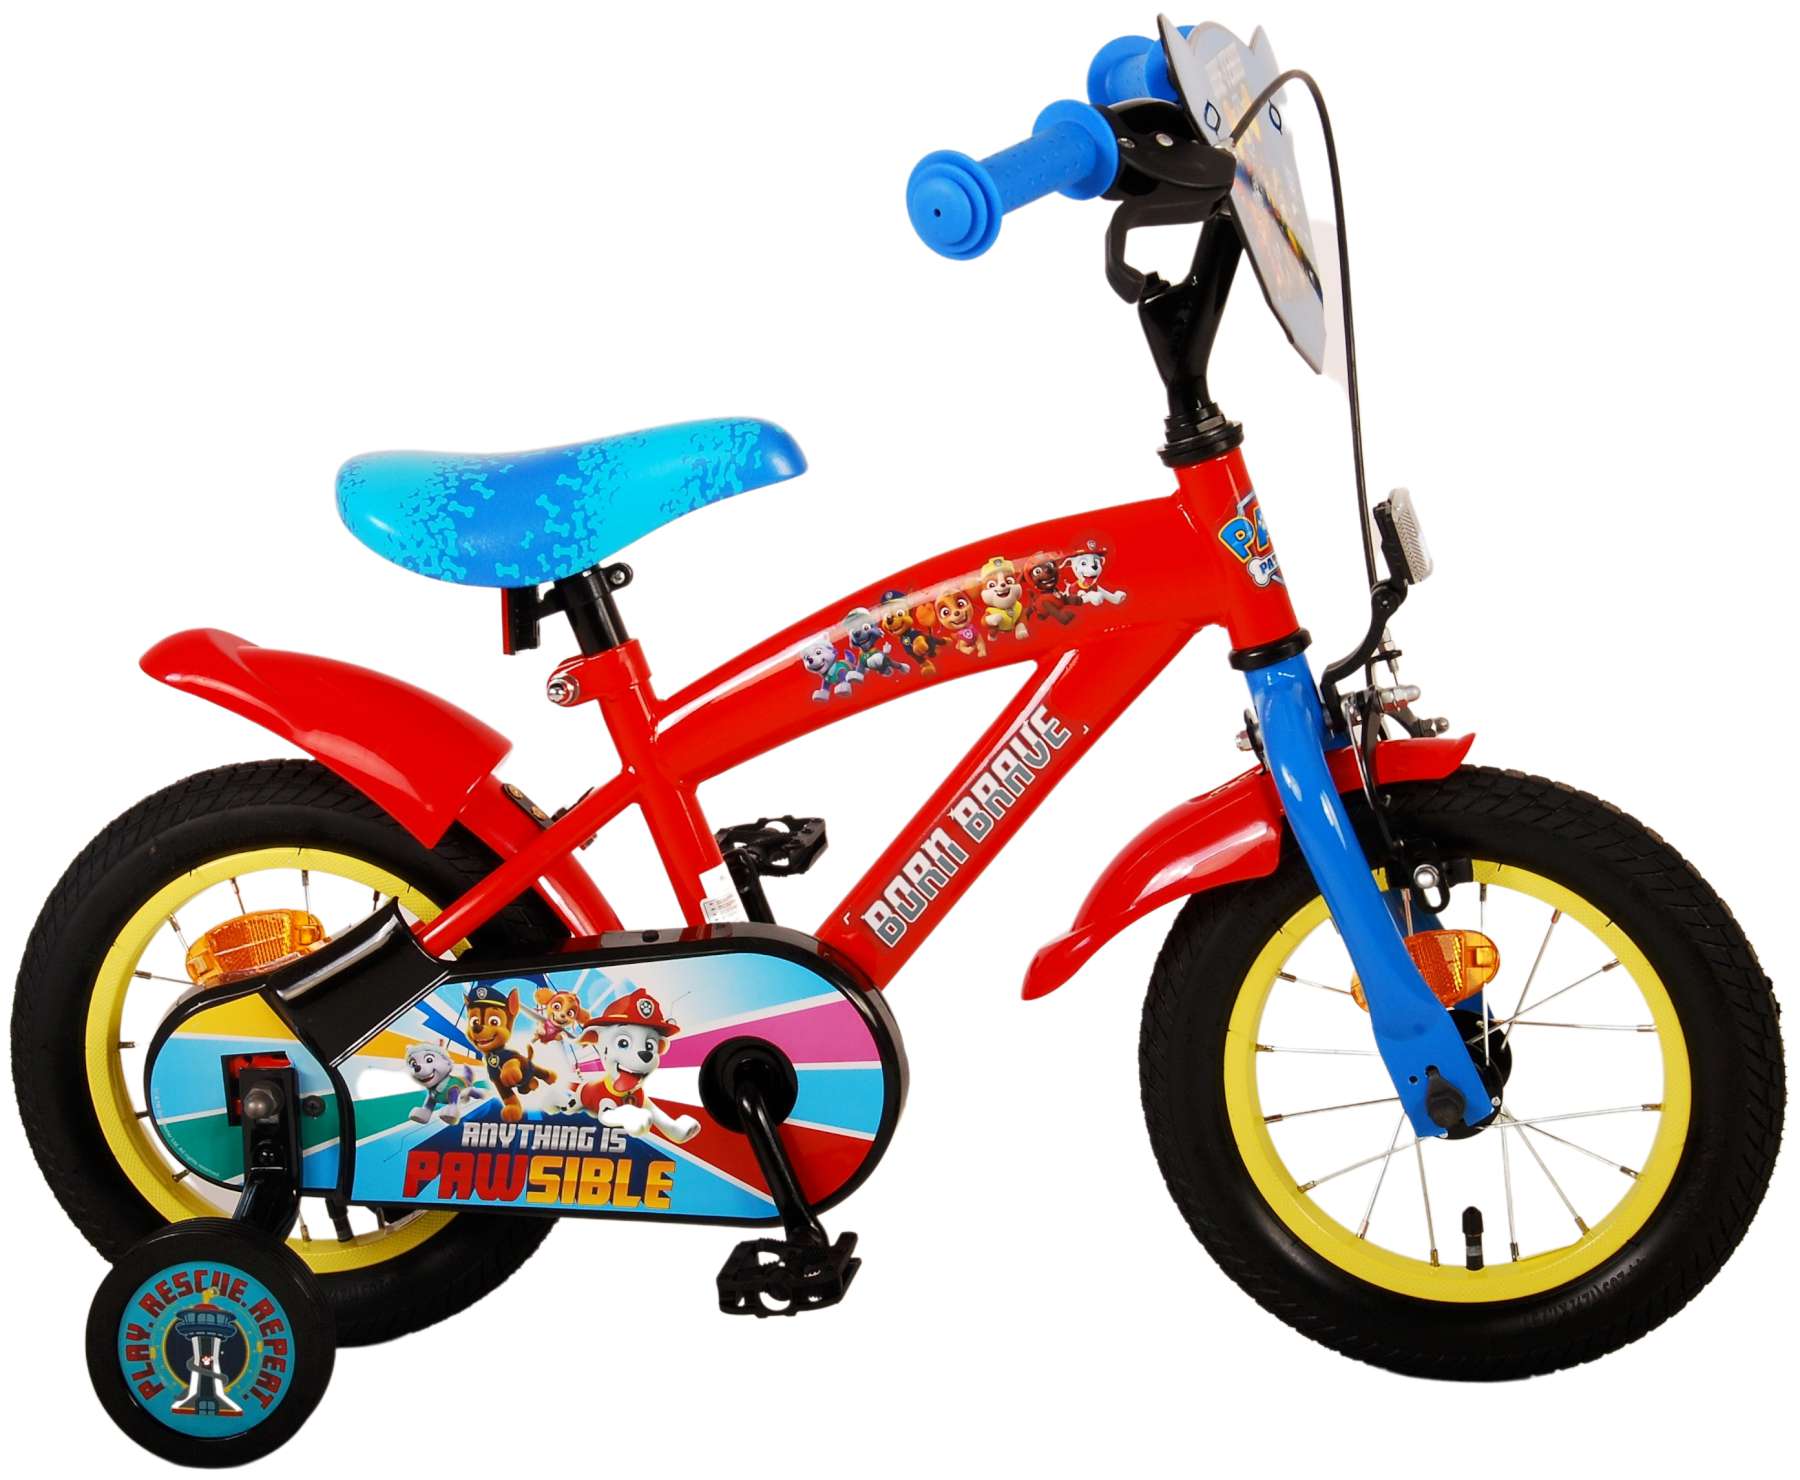 Kinderfahrrad Paw Patrol für Jungen 12 Zoll Kinderrad in Rot/Blau